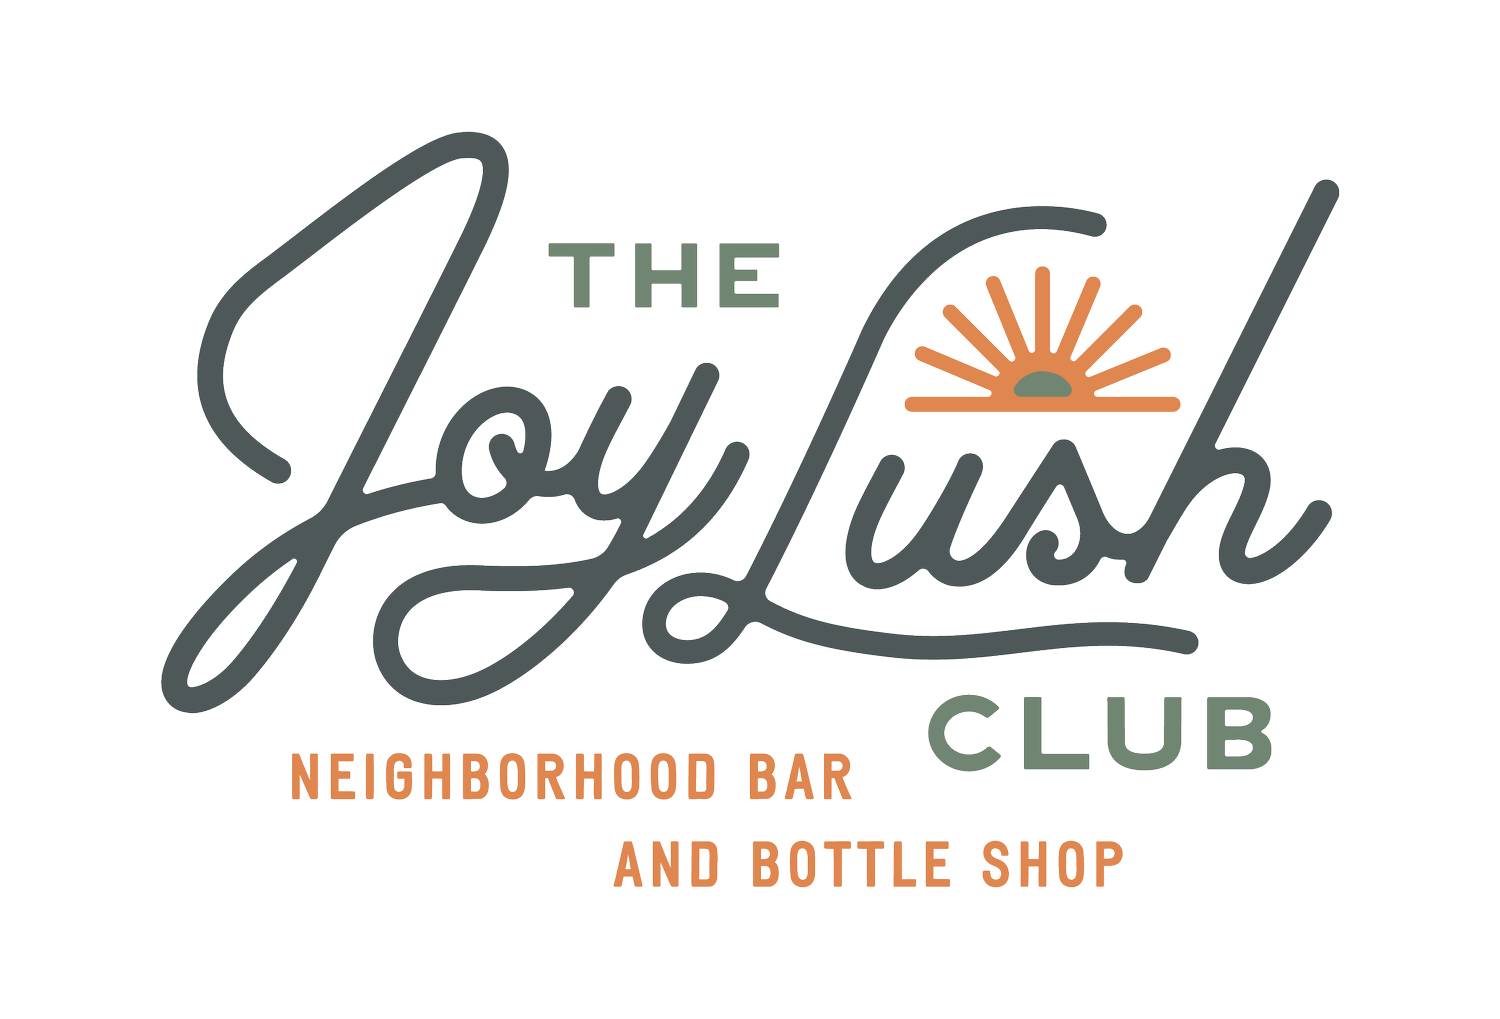 The Joy Lush Club